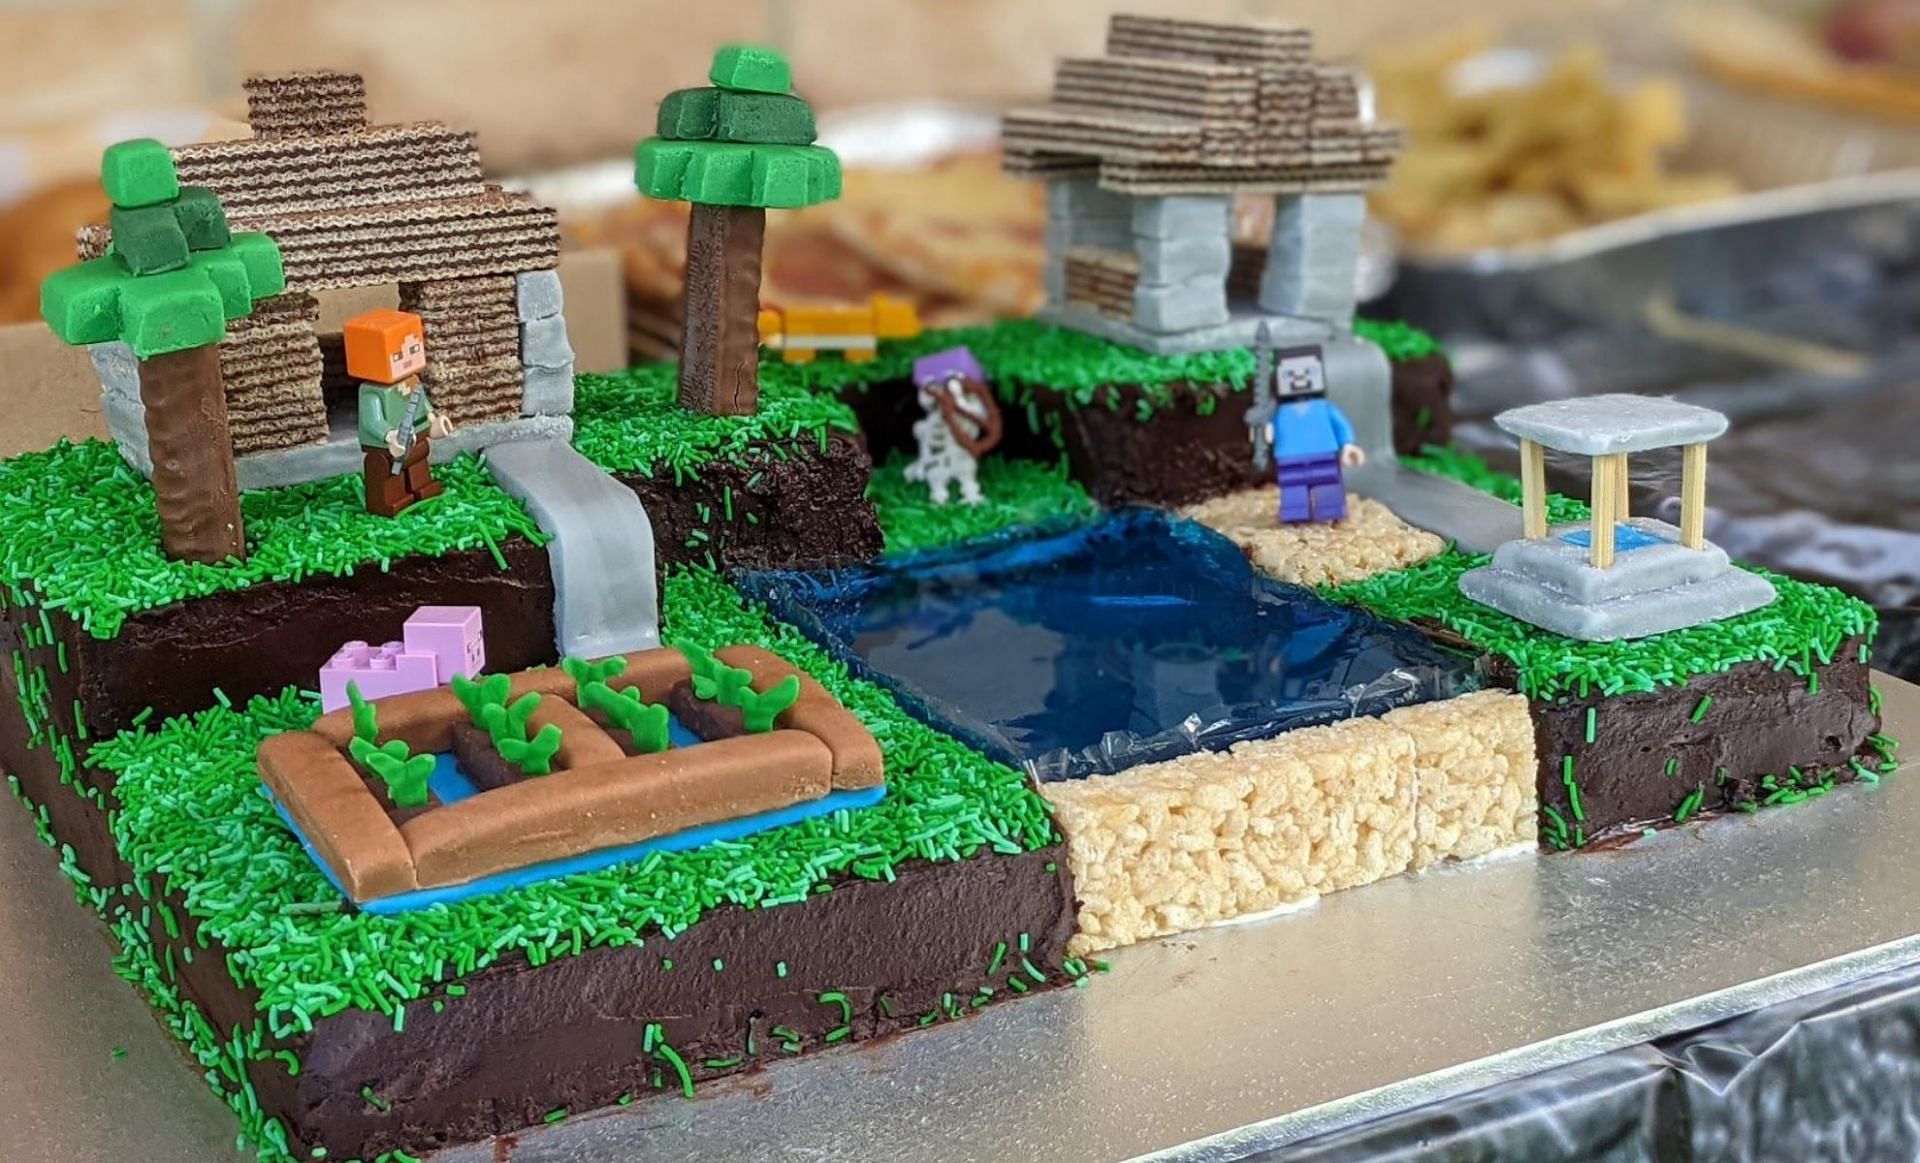 lego minecraft cake